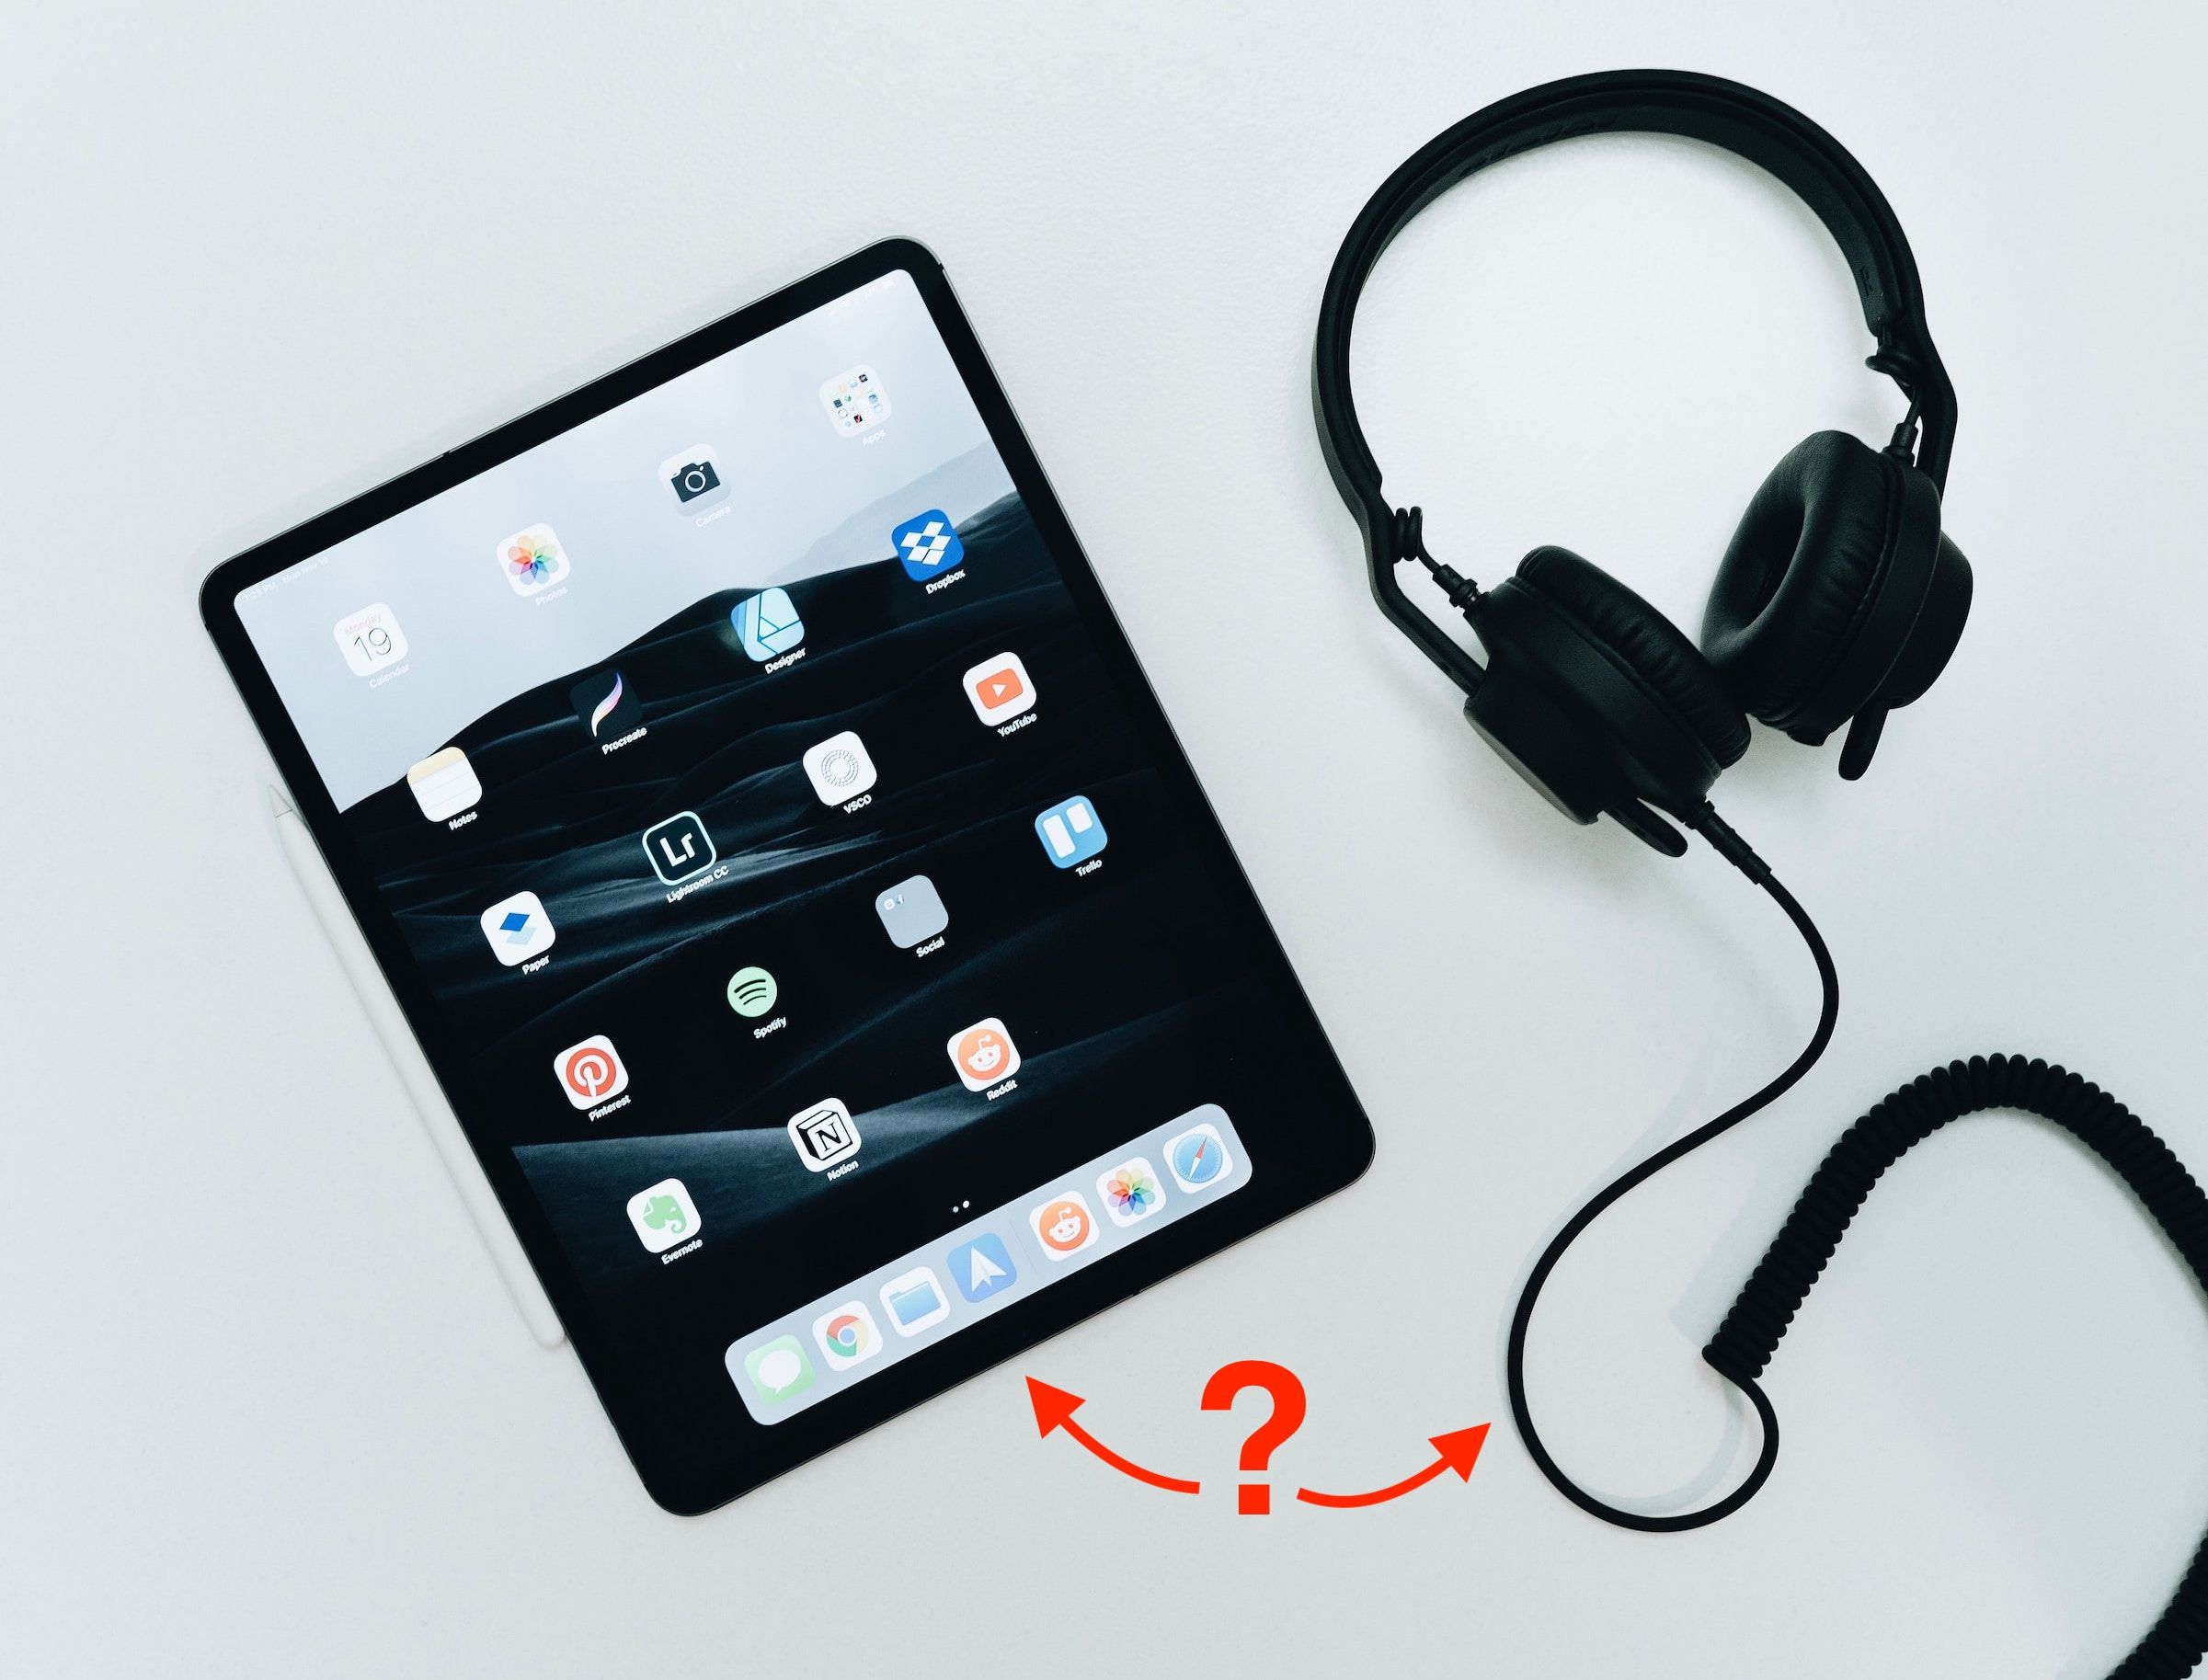 iPad next to headphones not connected